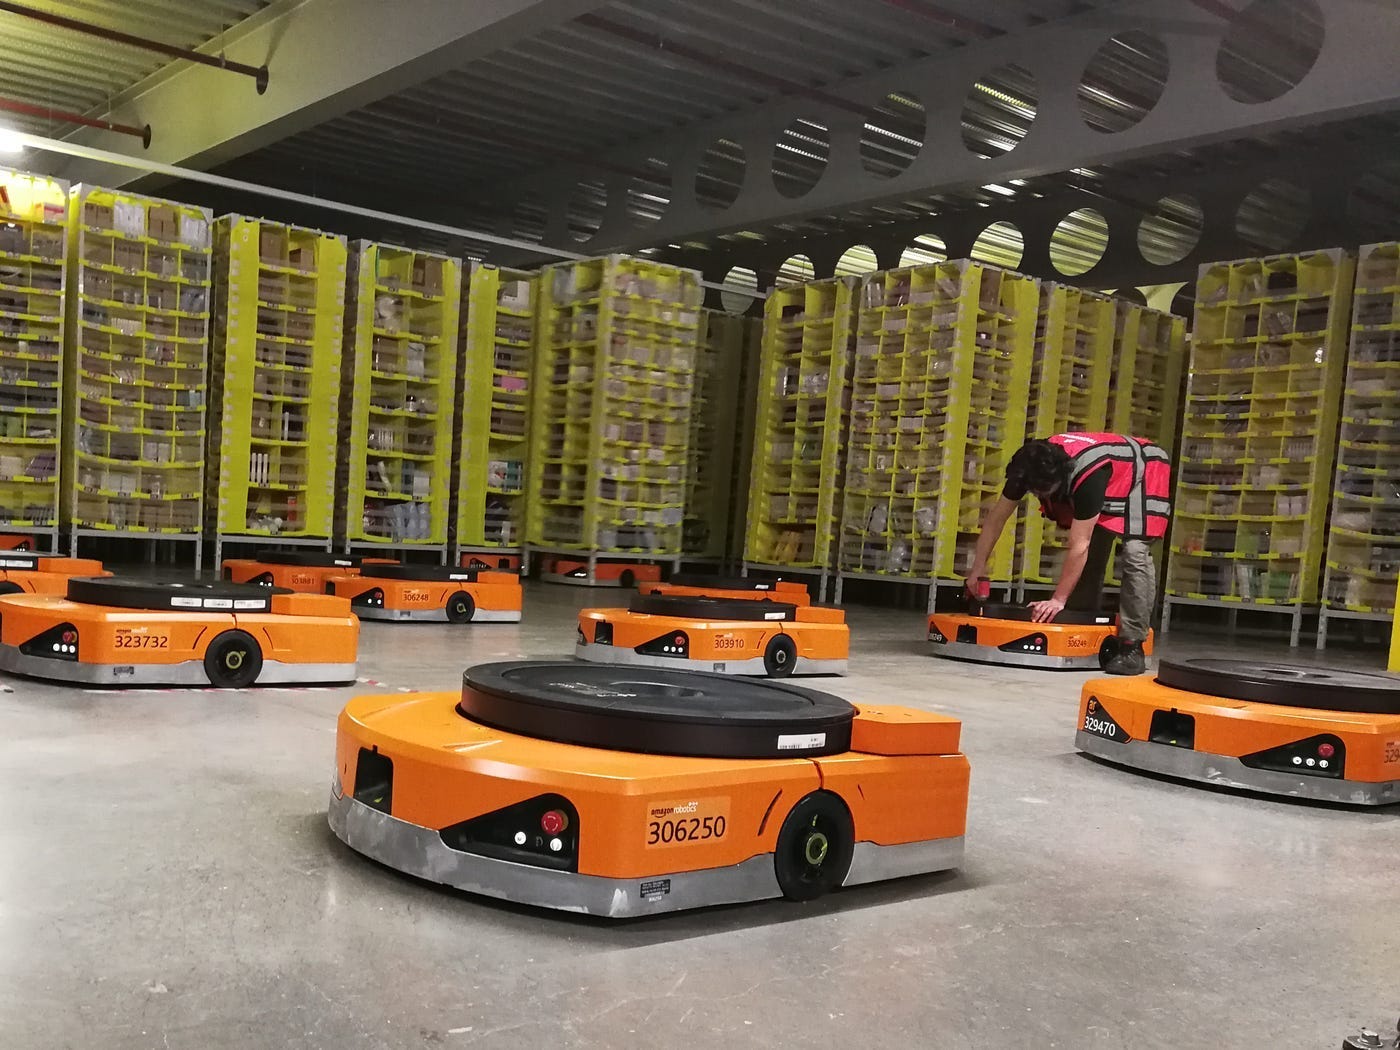 Robots in a UK Amazon warehouse